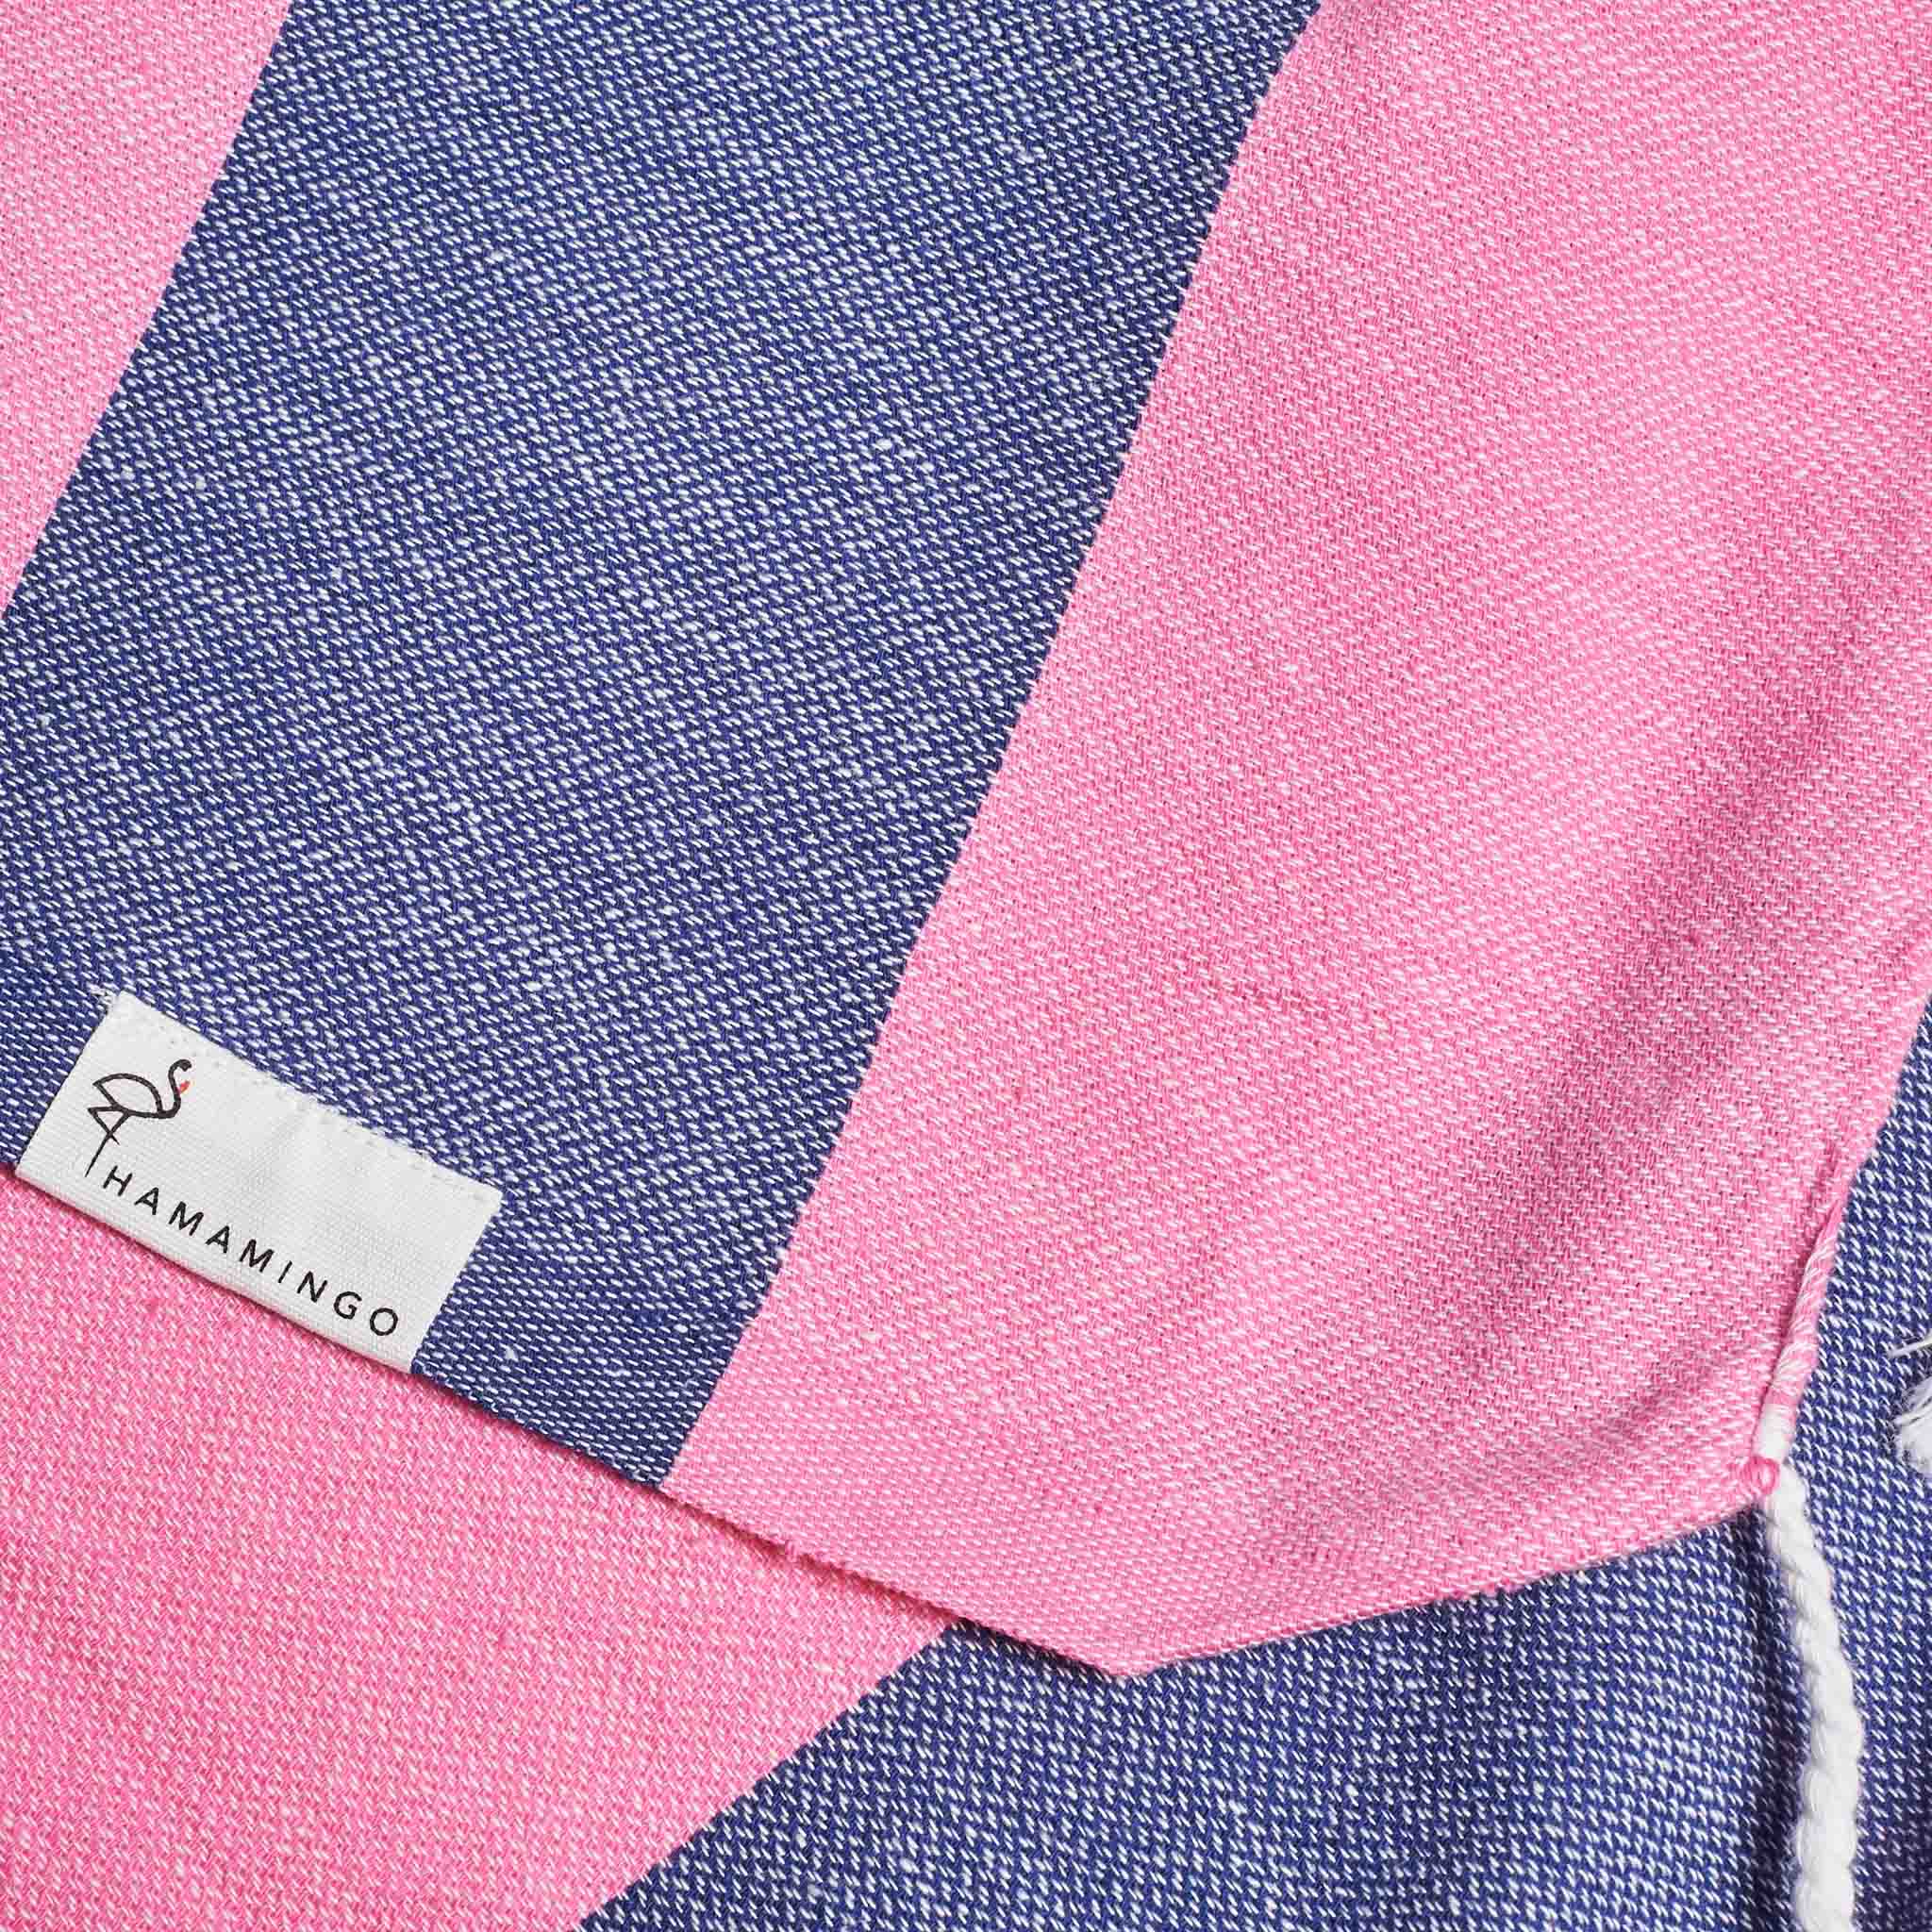 Carnival Towel Hot Pink & Navy Blue - HAMAMINGO